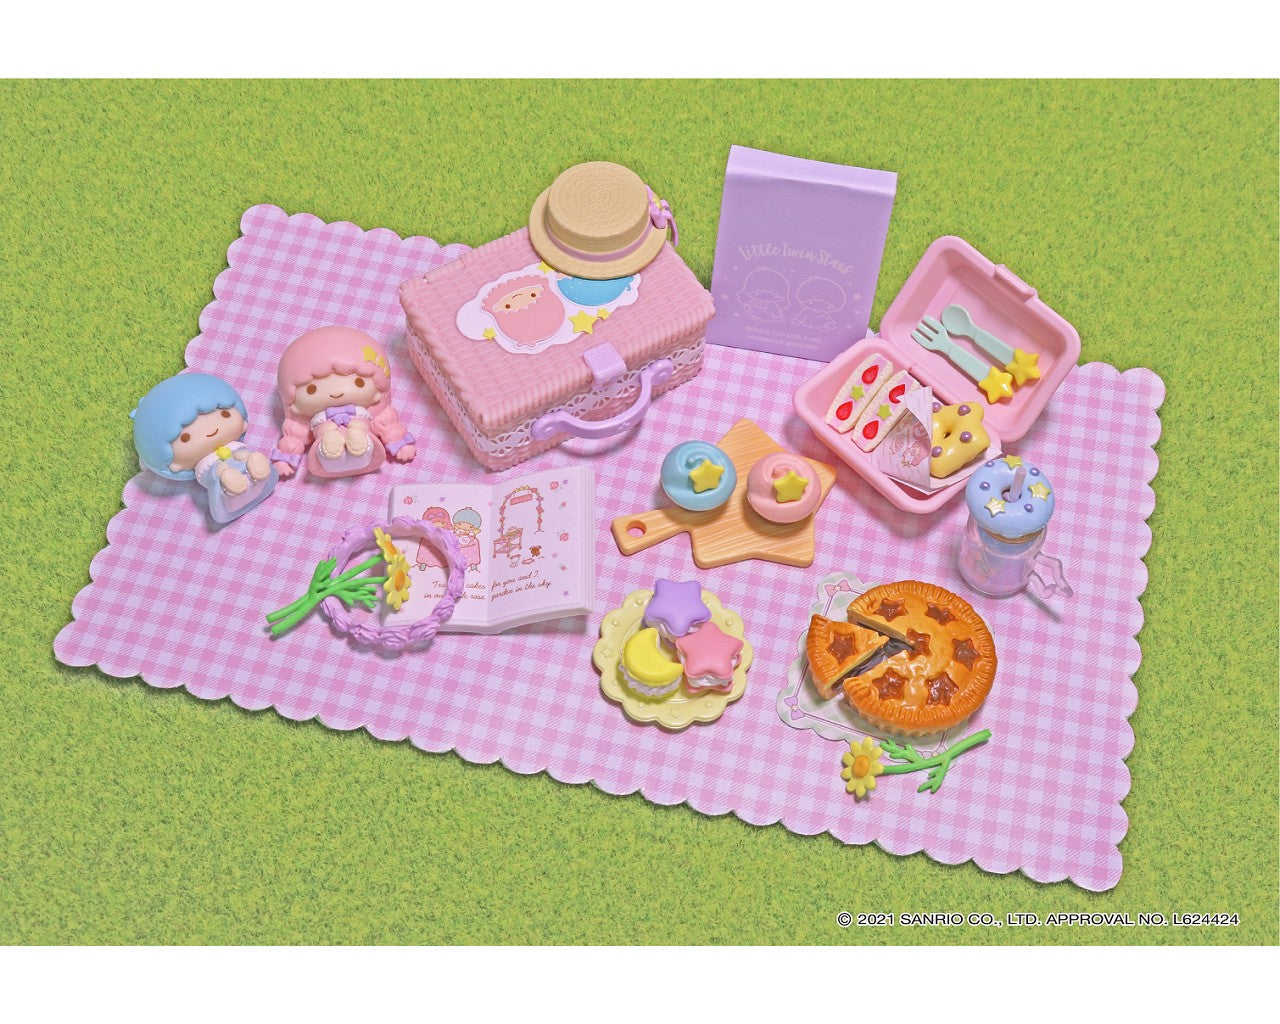 Re-ment Miniatures Sanrio Little Twin Stars Yumekawa Picnic - No.2